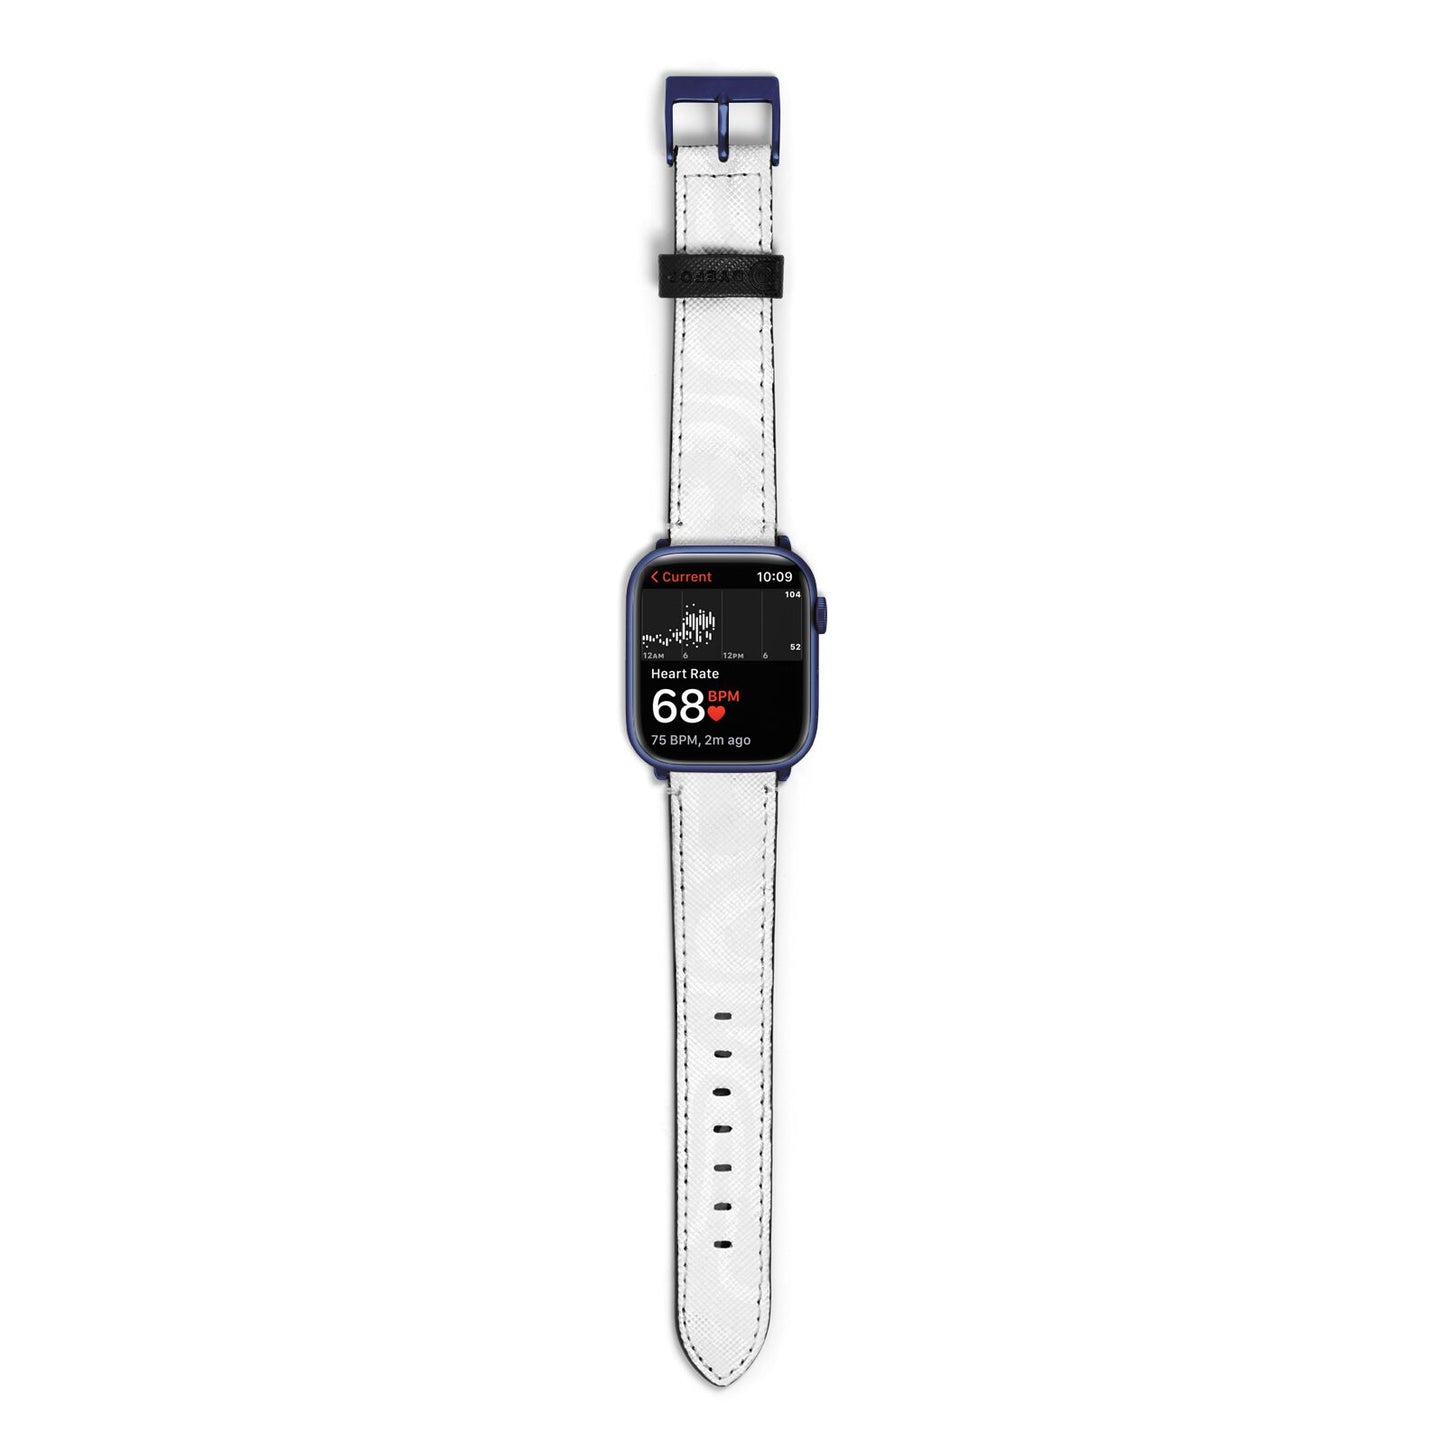 White Swirl Apple Watch Strap Size 38mm with Blue Hardware